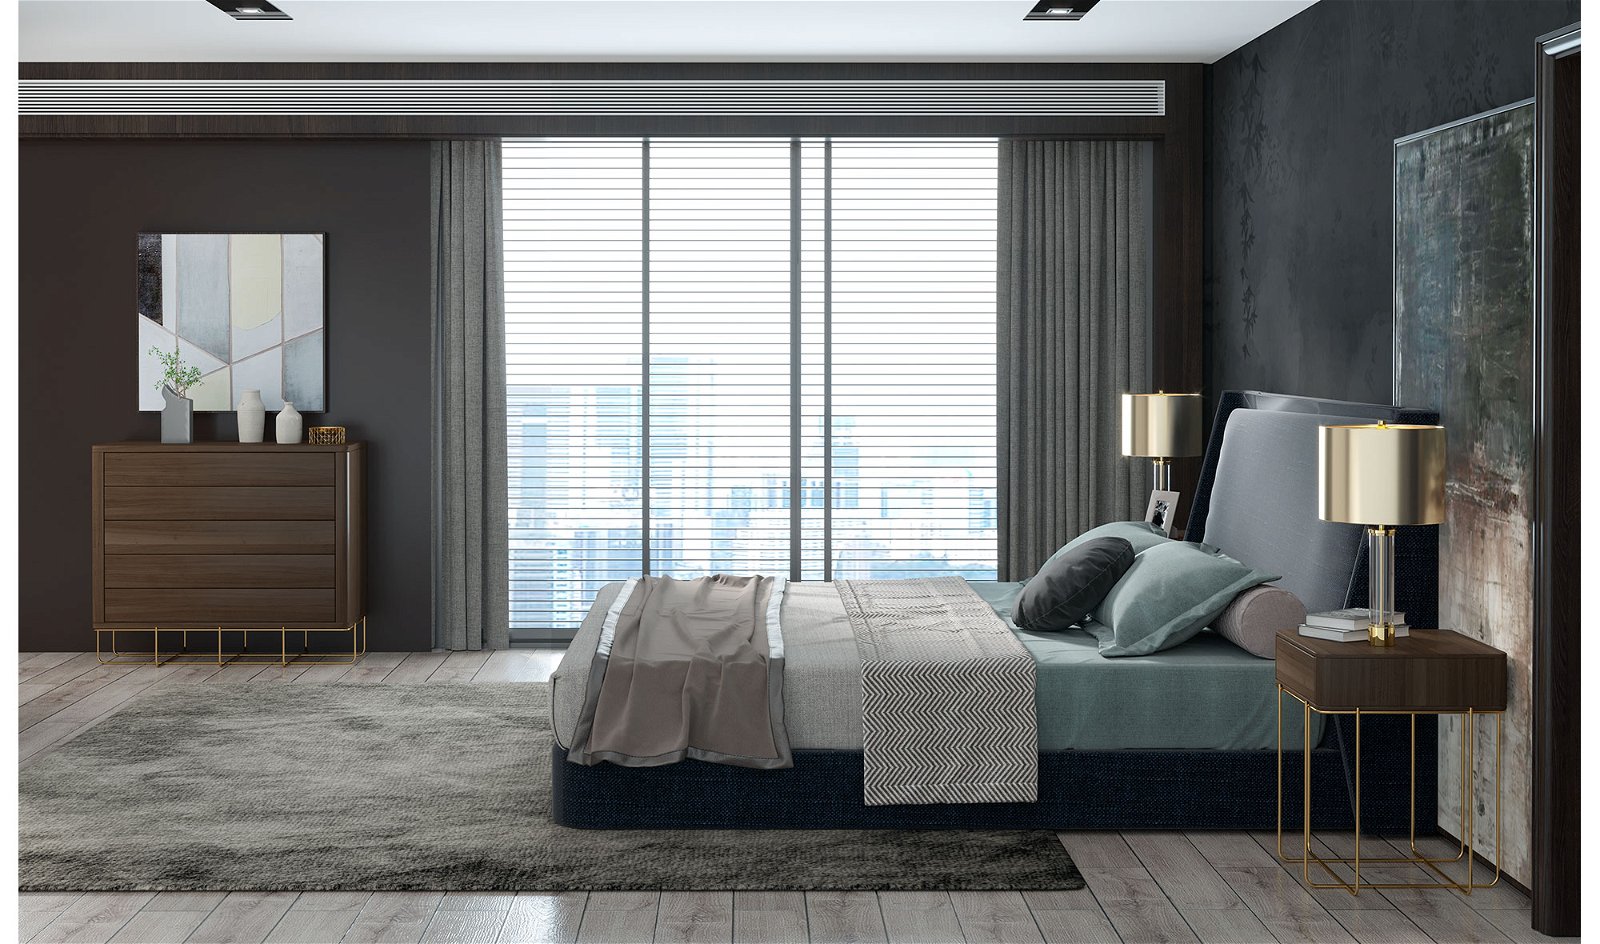 Dormitorio moderno Varila by Bodonni